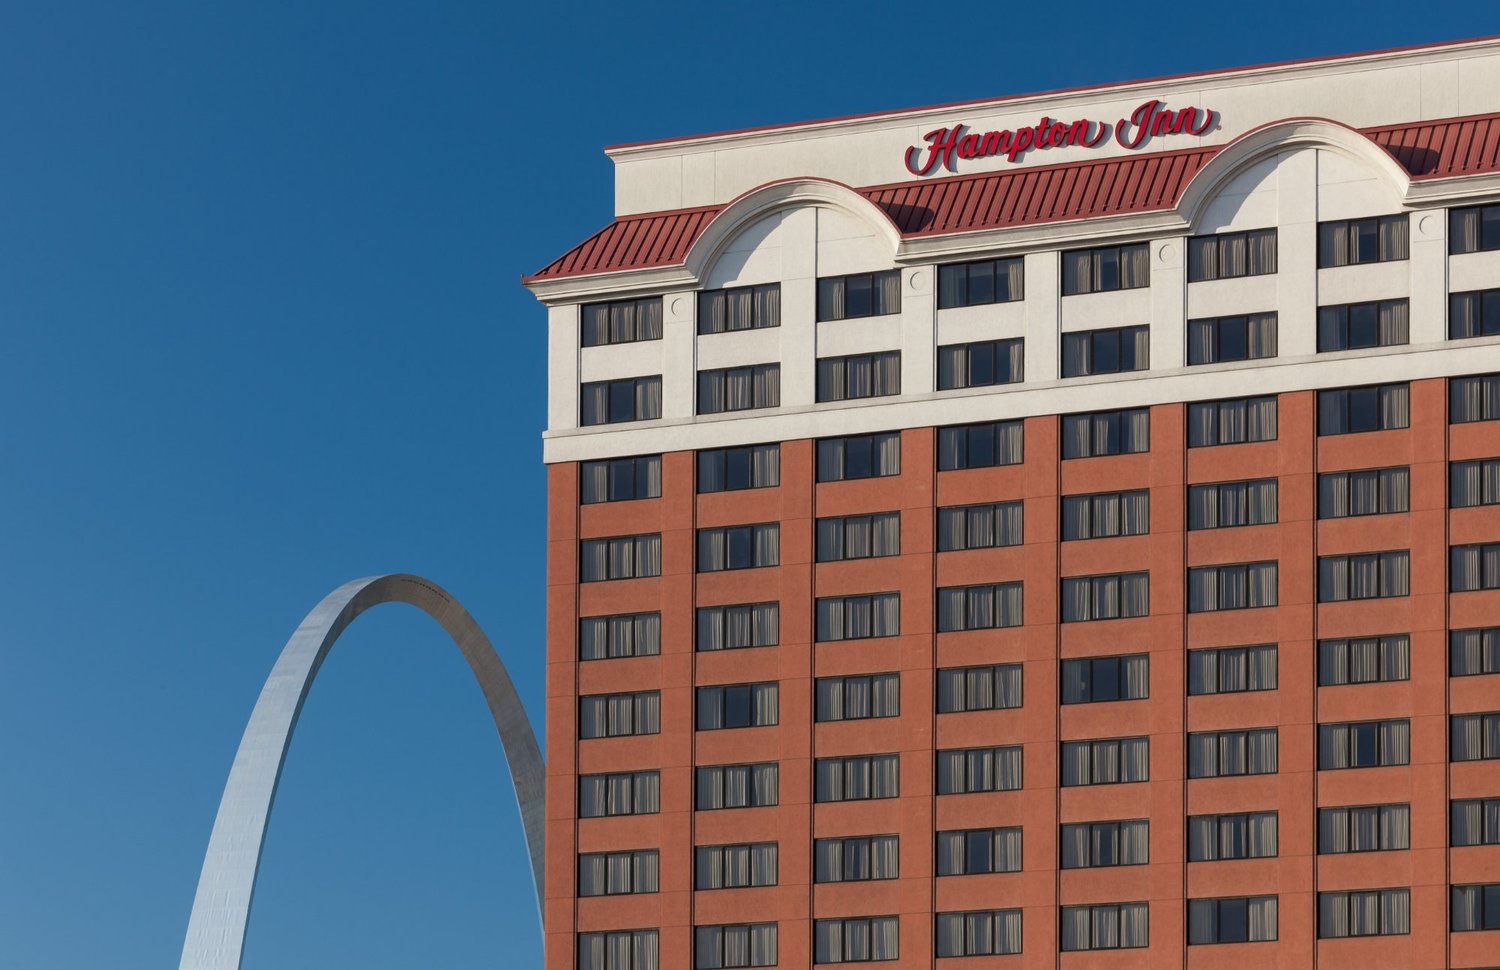 Hampton Inn St. Louis-Downtown (At the Gateway Arch), Saint Louis, MO Jobs | Hospitality Online